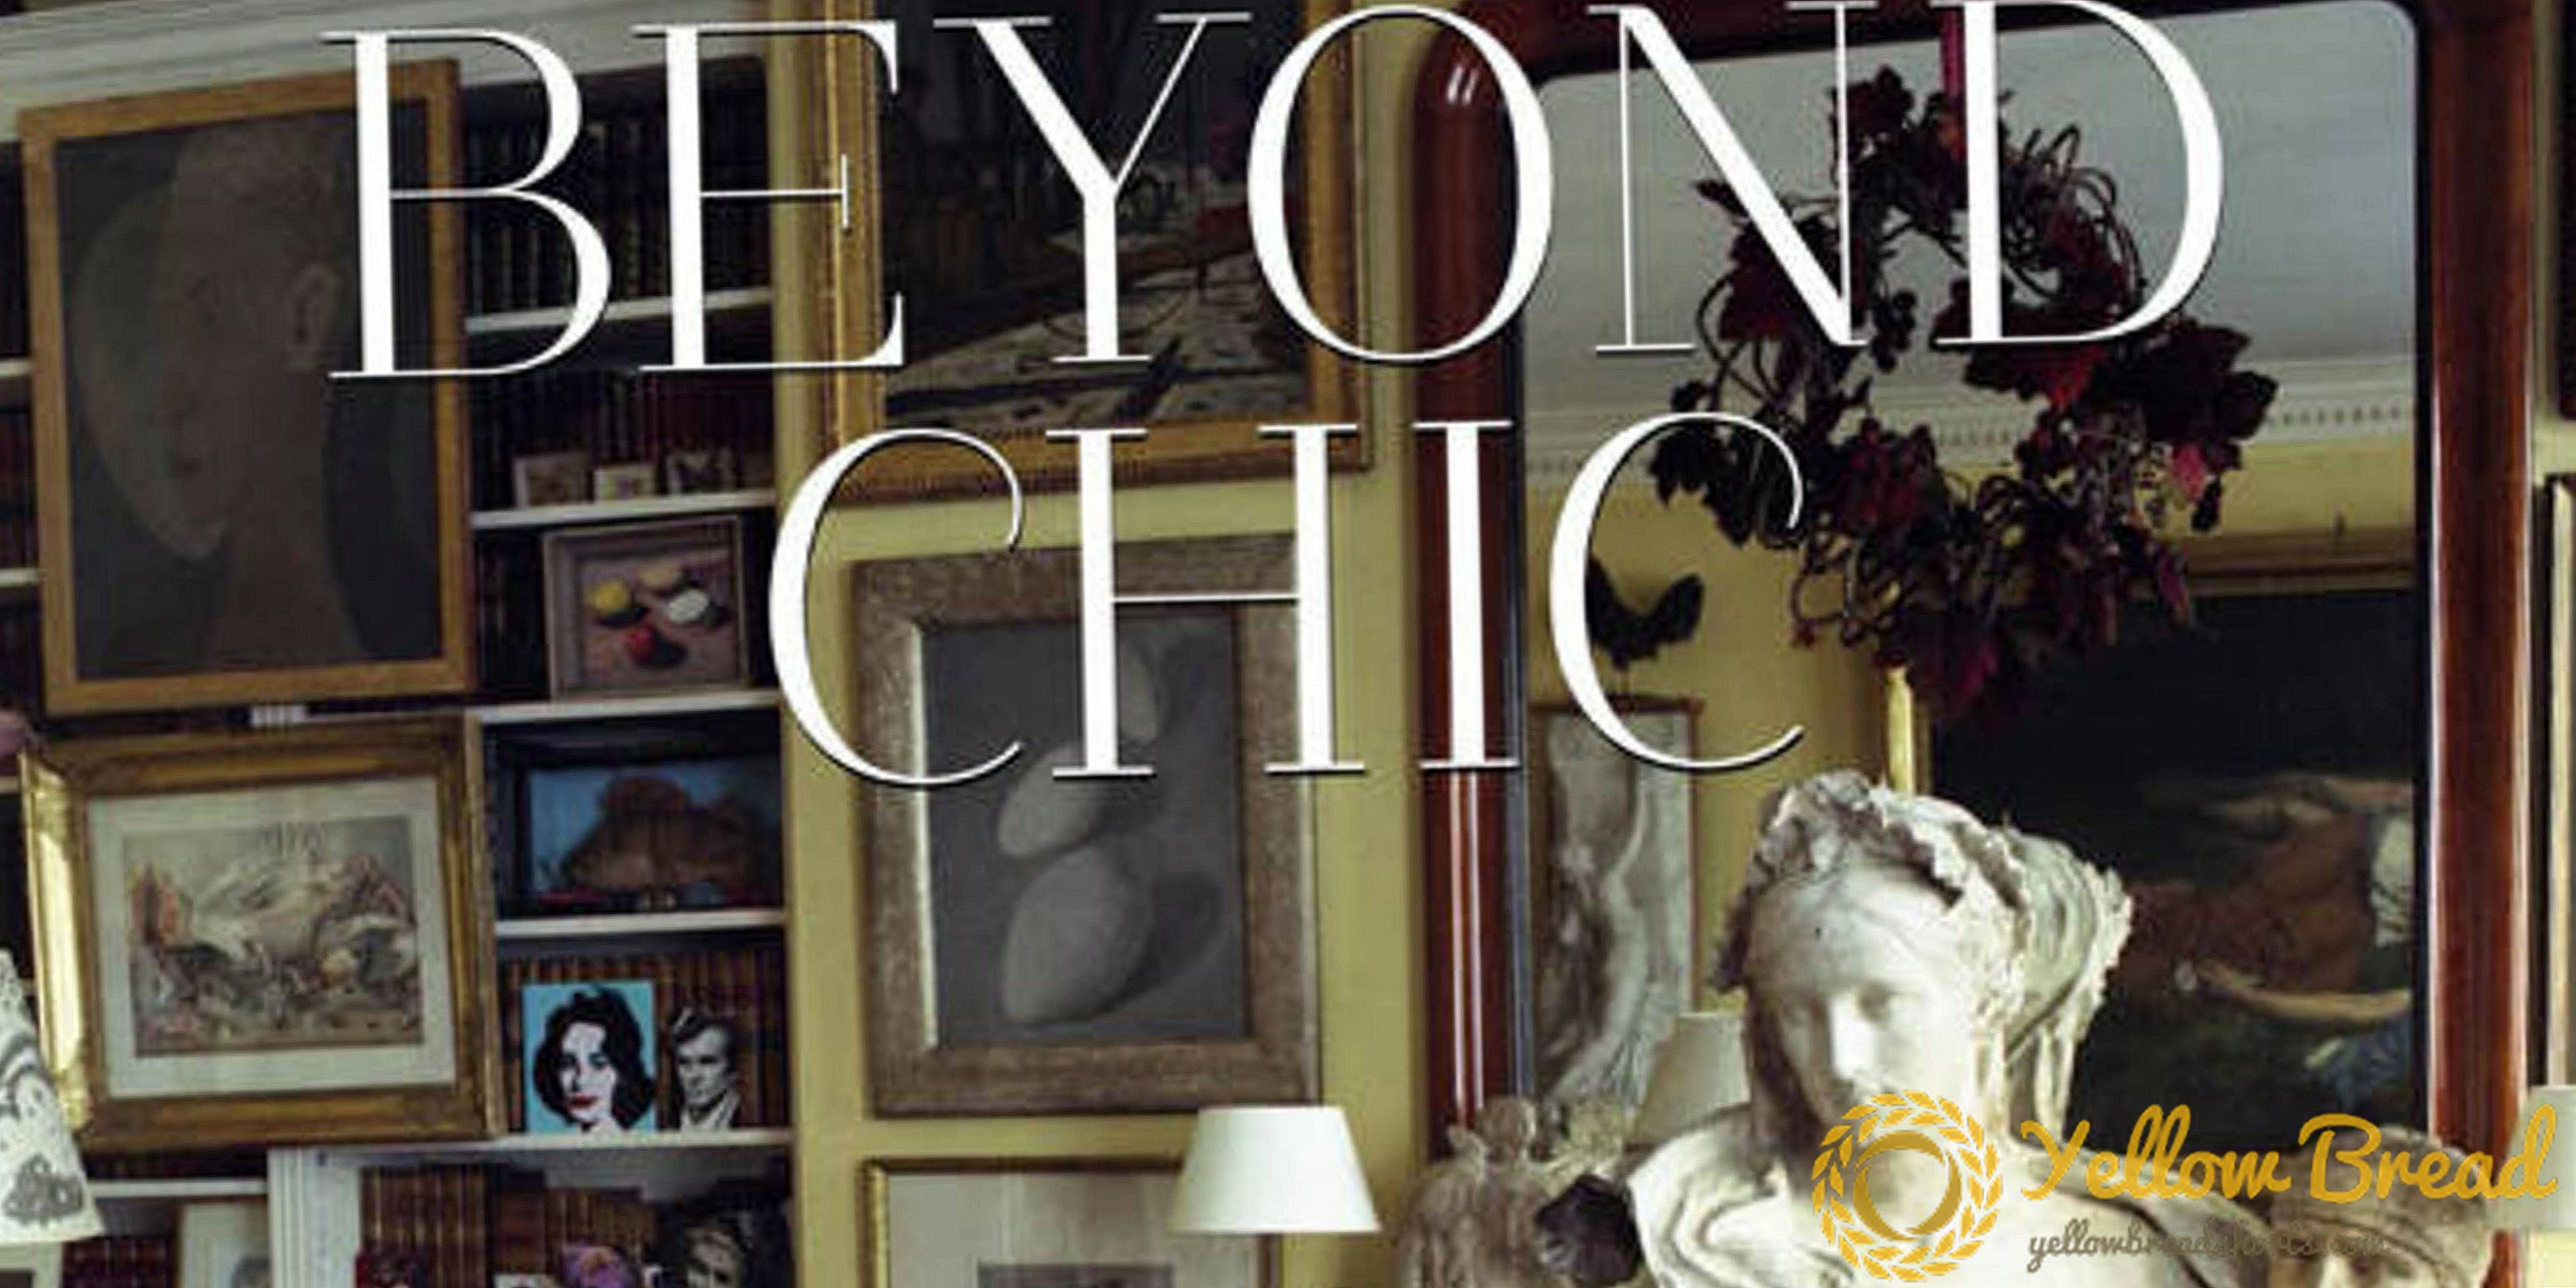 Loe hästi: Beyond Chic